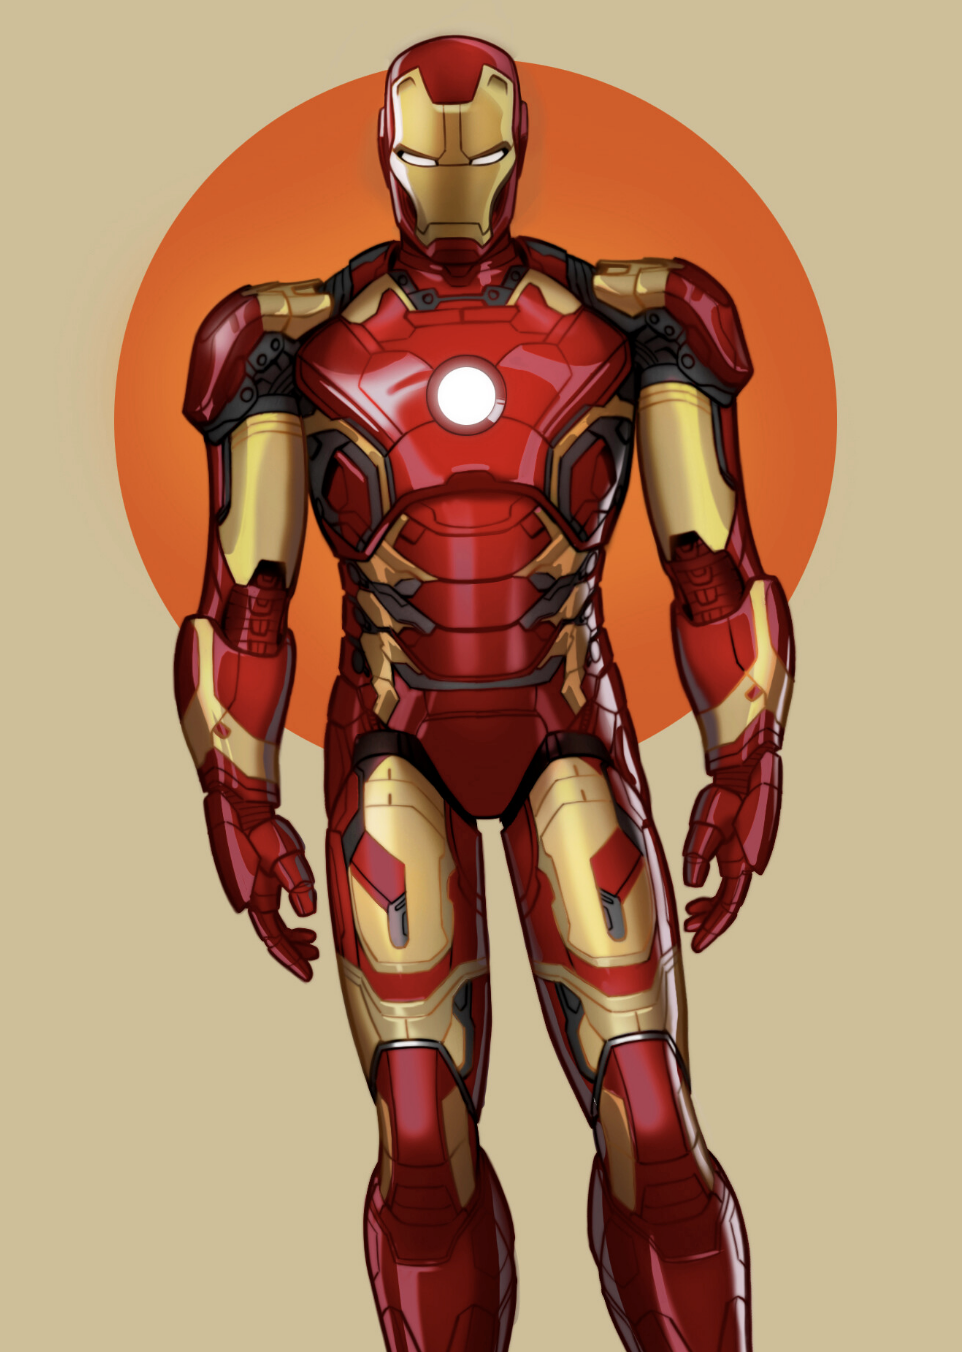 Iron Man, Marvel Cinematic Universe Wiki